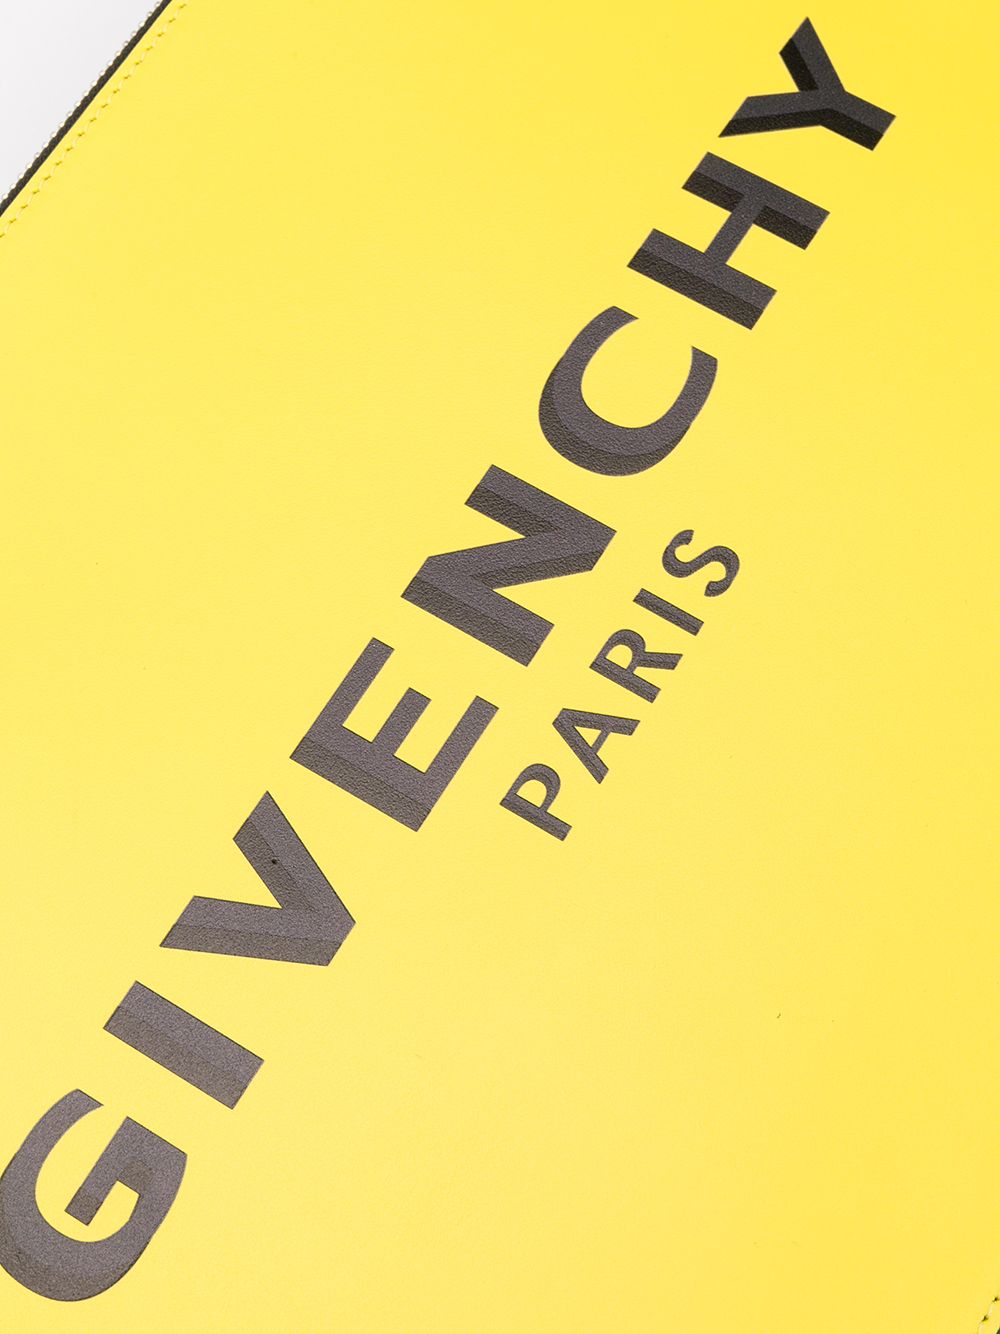 фото Givenchy клатч с логотипом